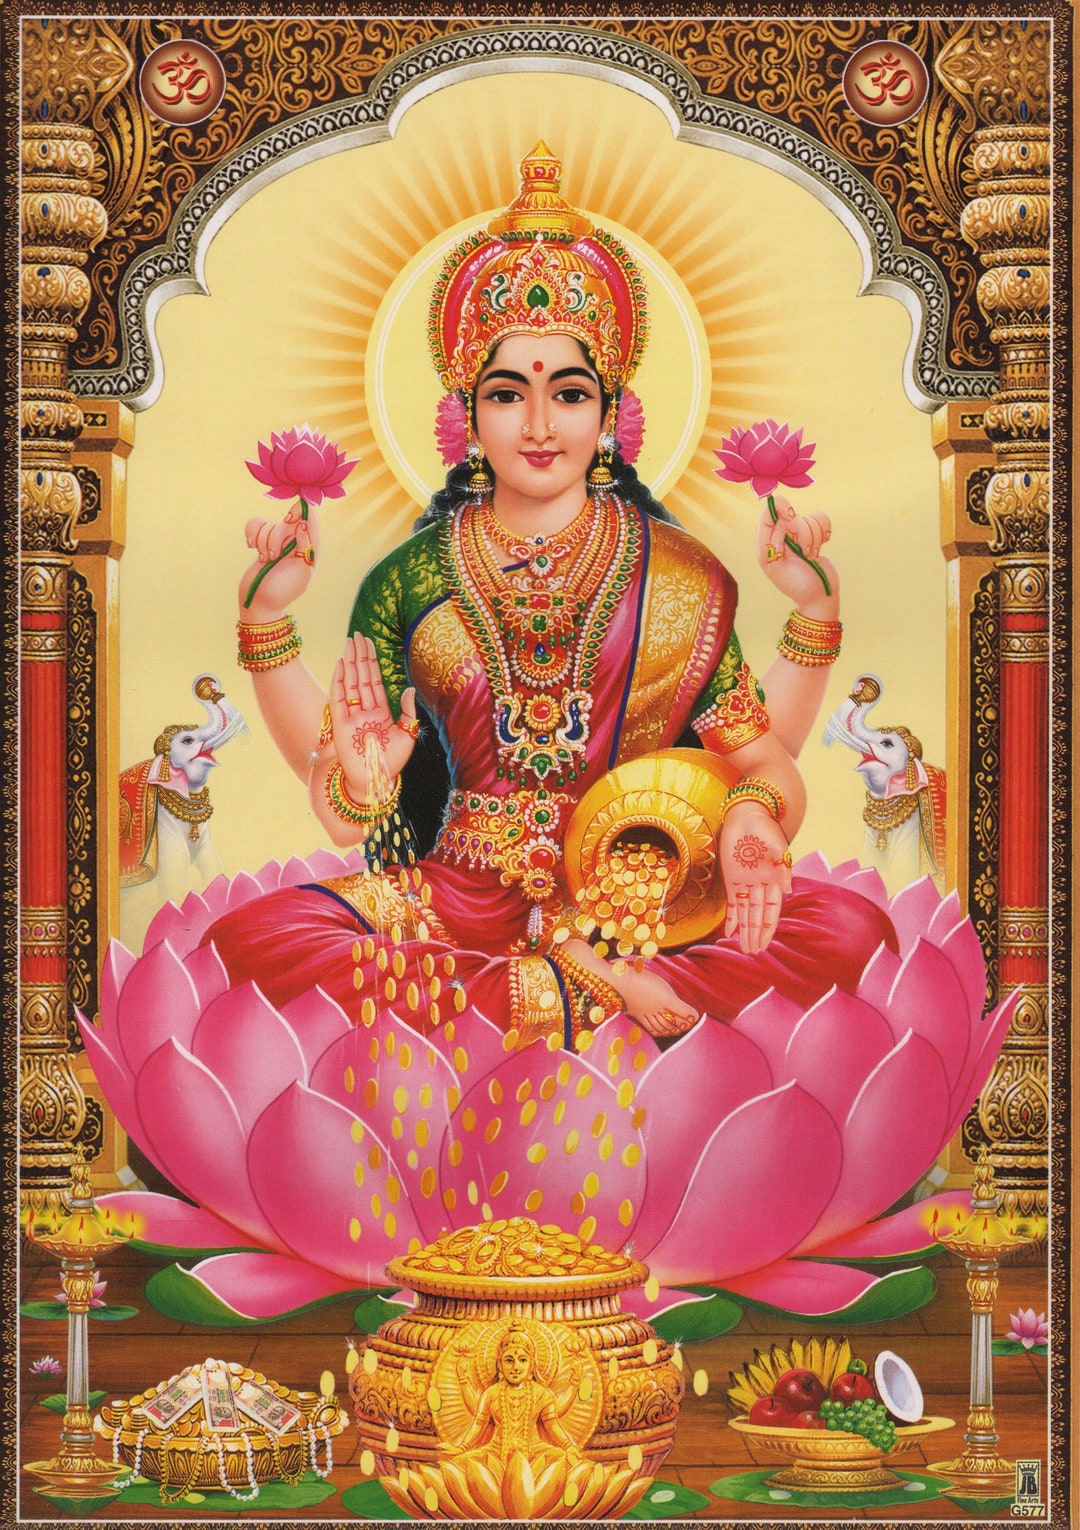 Buy Lakshmi vintage-style Indian Hindu Devotional Poster Print ...